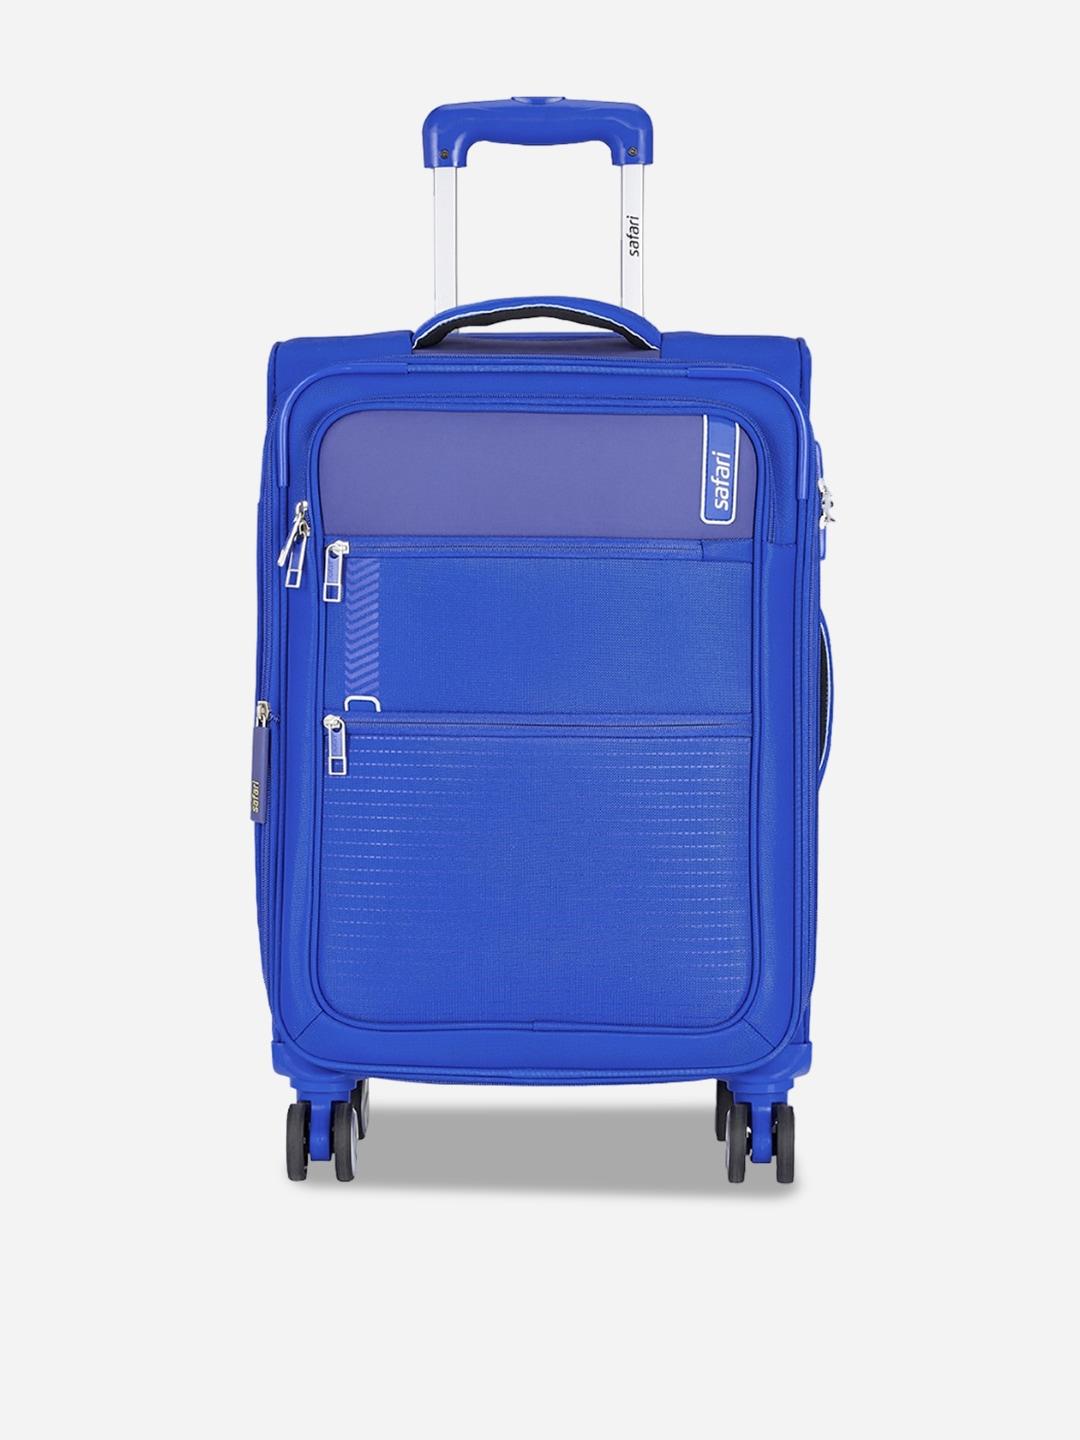 safari-soft-sided-cabin-trolley-suitcase